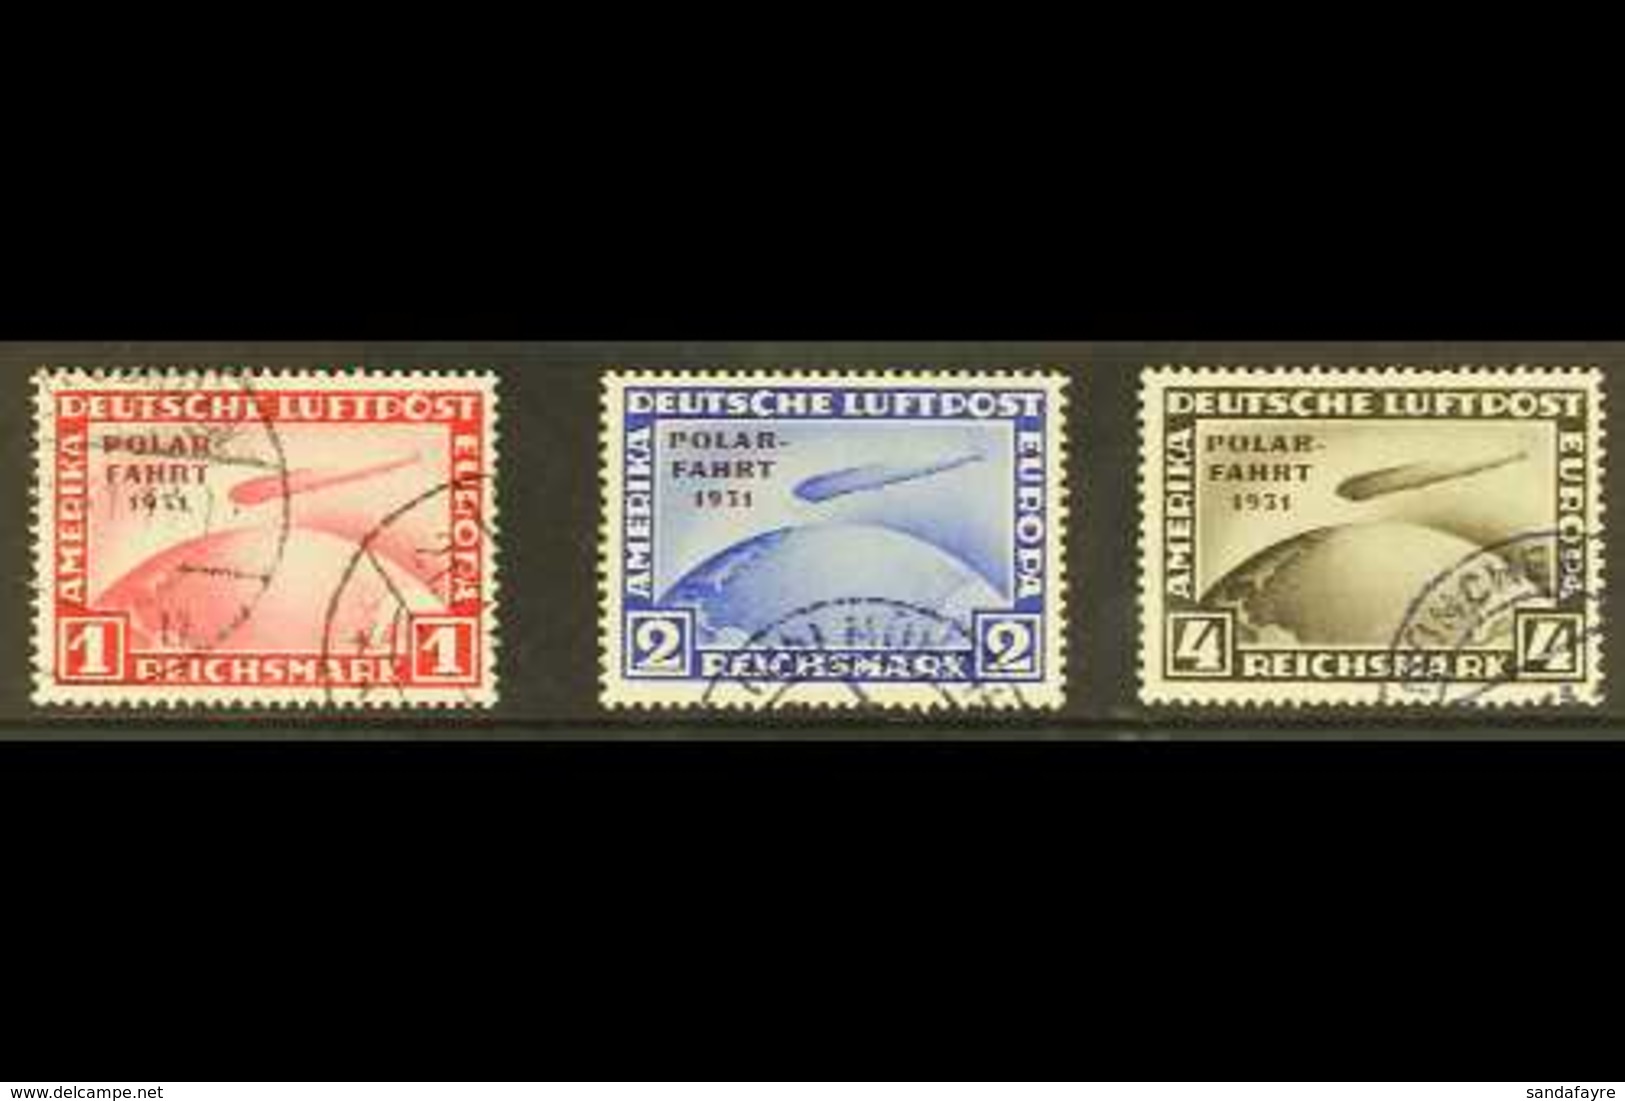 1931 Air Graf Zeppelin Polar Flight Overprints Complete Set (Michel 456/58, SG 469/71), Fine Cds Used, Fresh. (3 Stamps) - Other & Unclassified